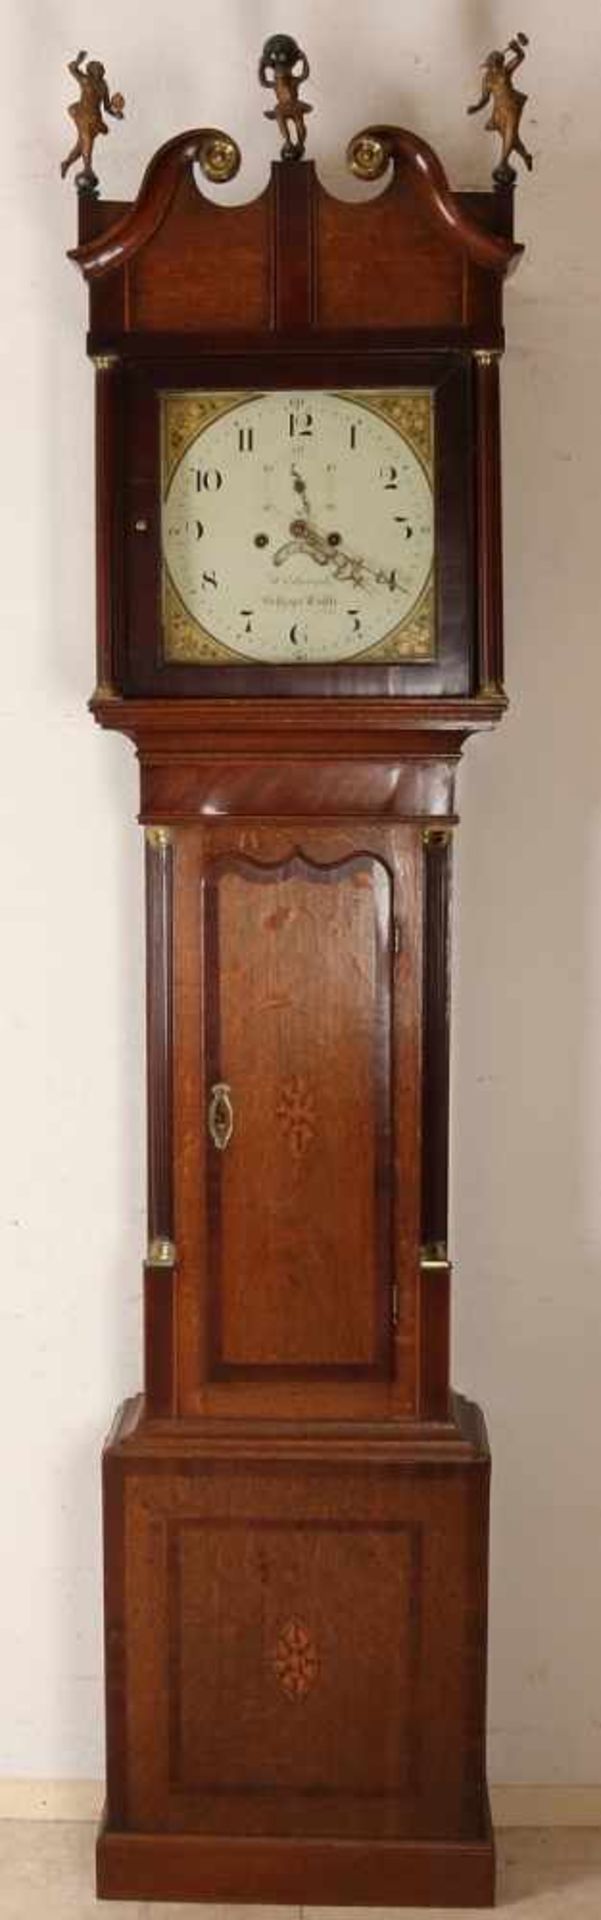 Antique English grandfather clock with oak / mahogany clock case. Circa 1800. Eight day clockwork,